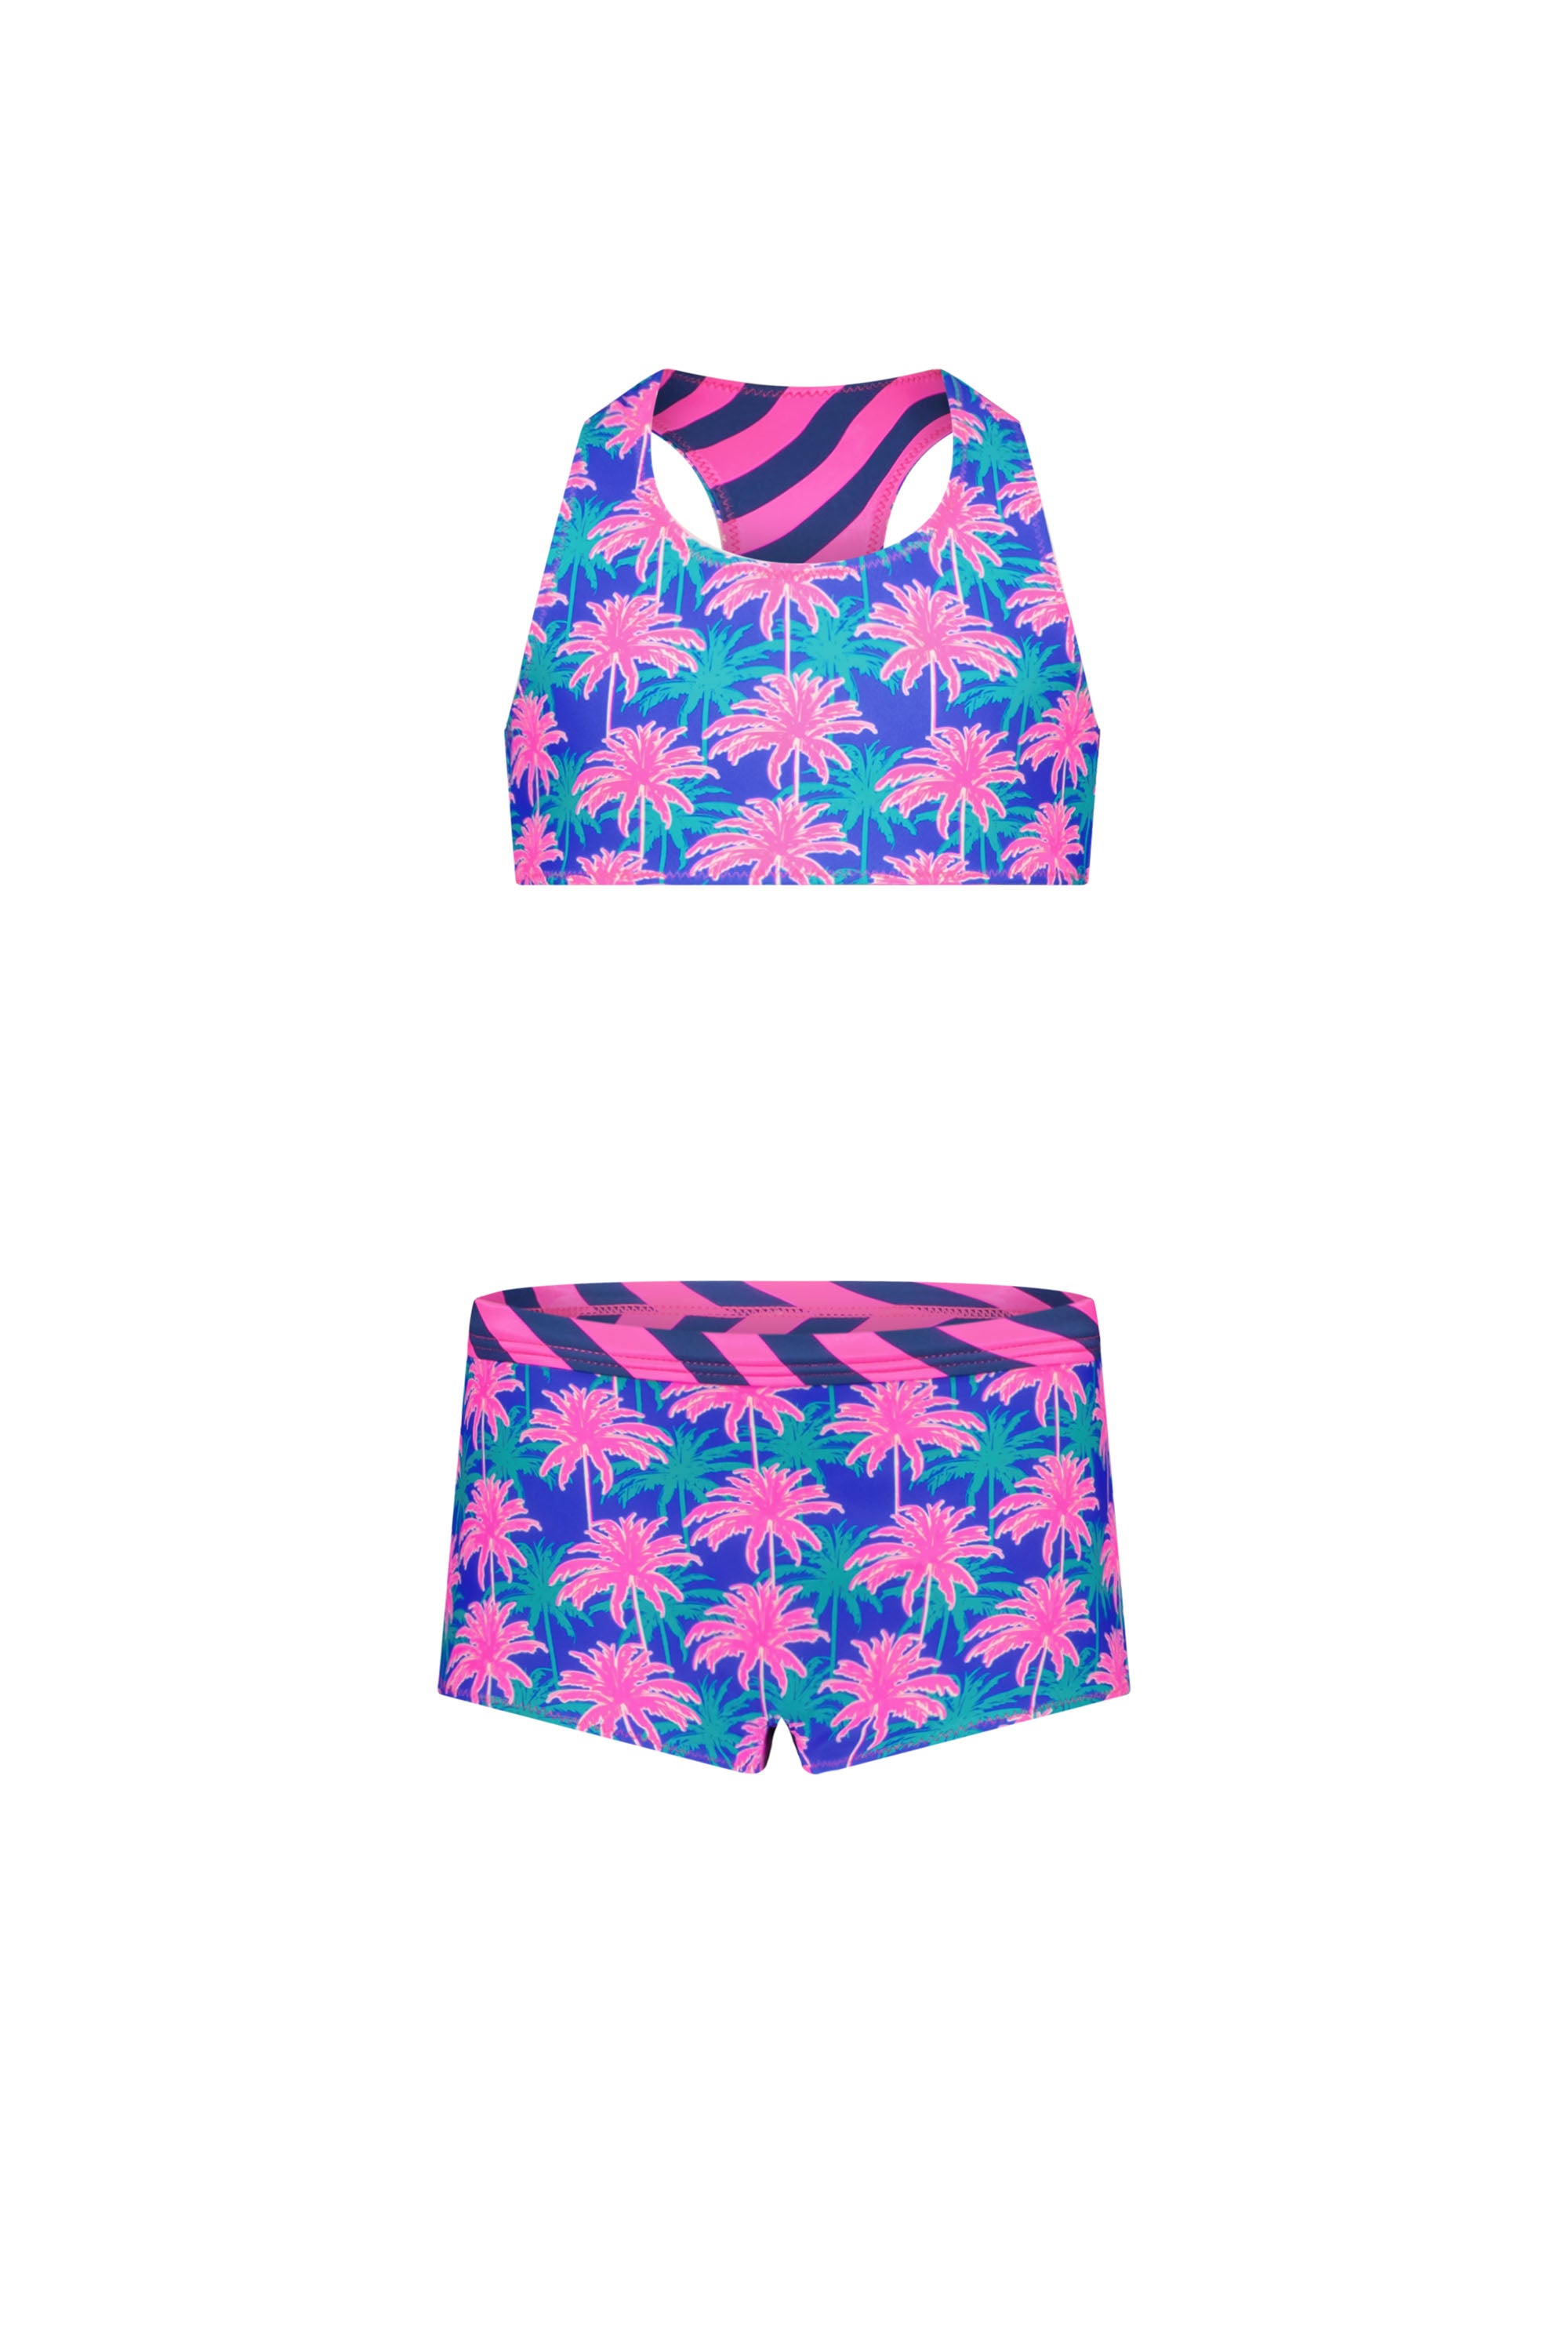 Just Beach Girls reversible bikini w/ leo ocean + tropical leaves